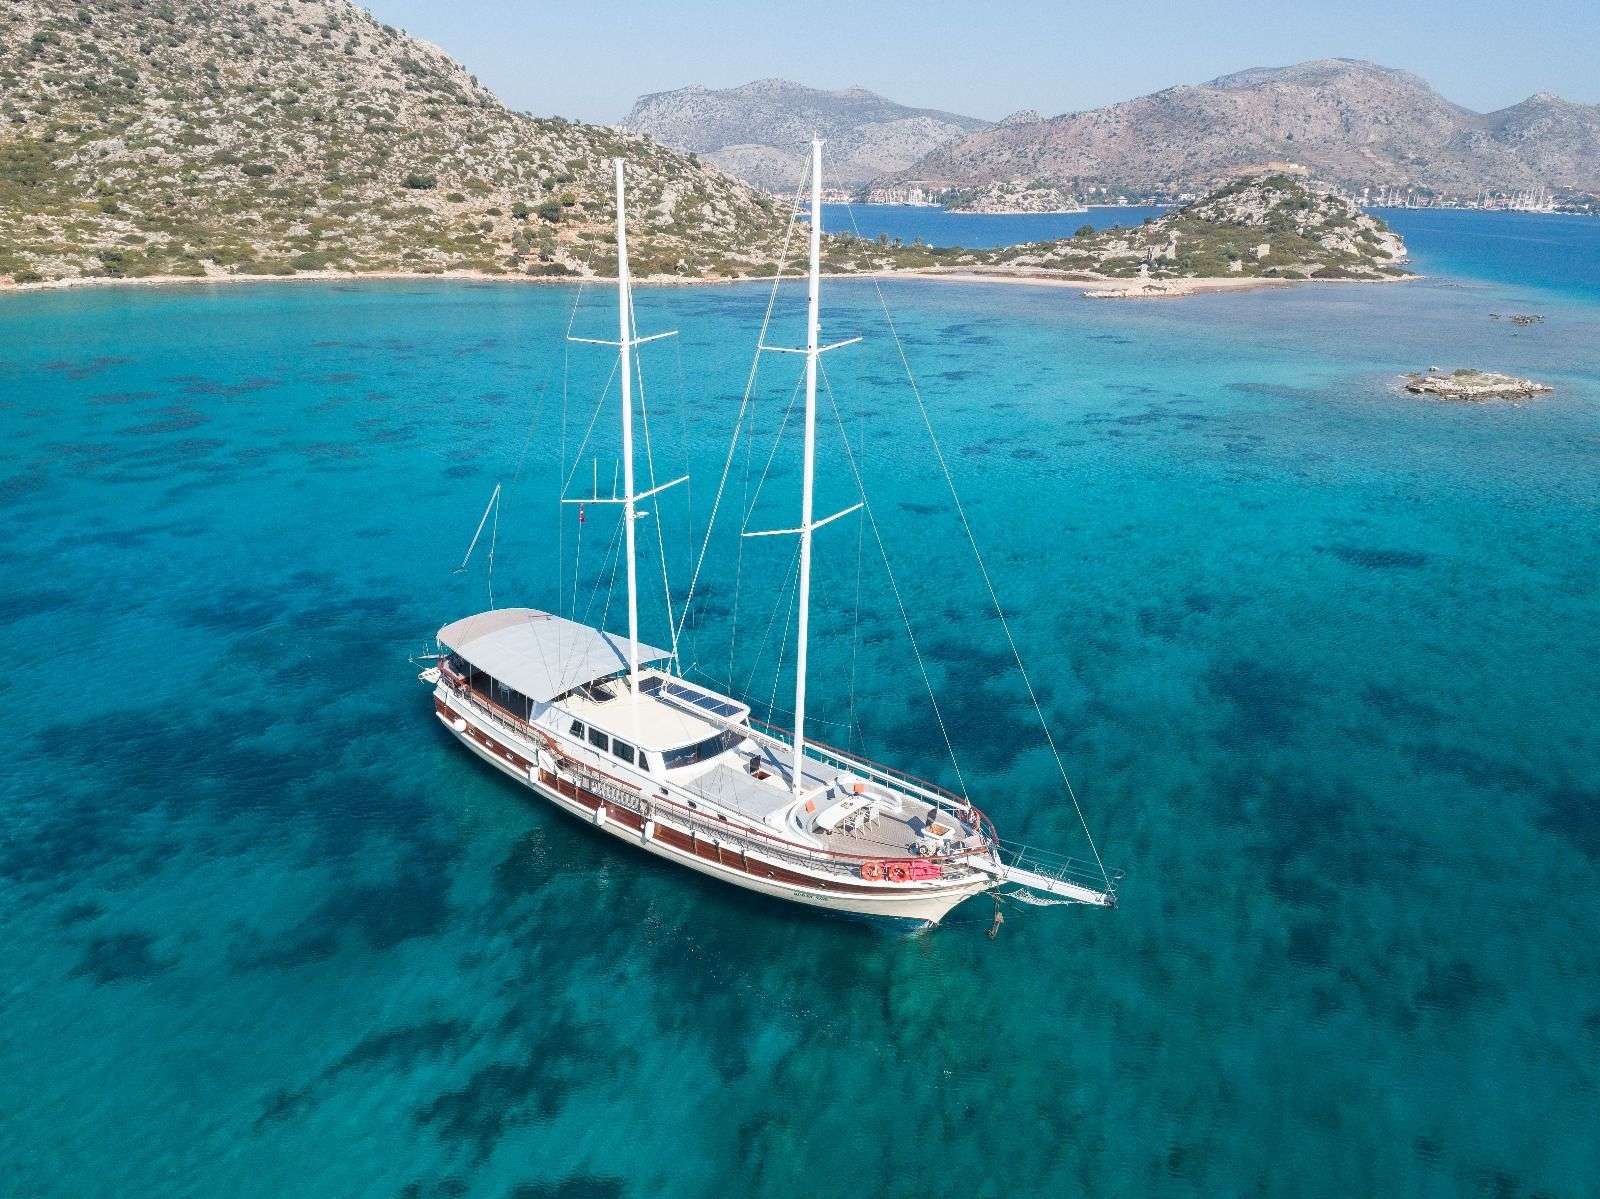 koray ege - Yacht Charter Porto Koufo & Boat hire in Greece & Turkey 2